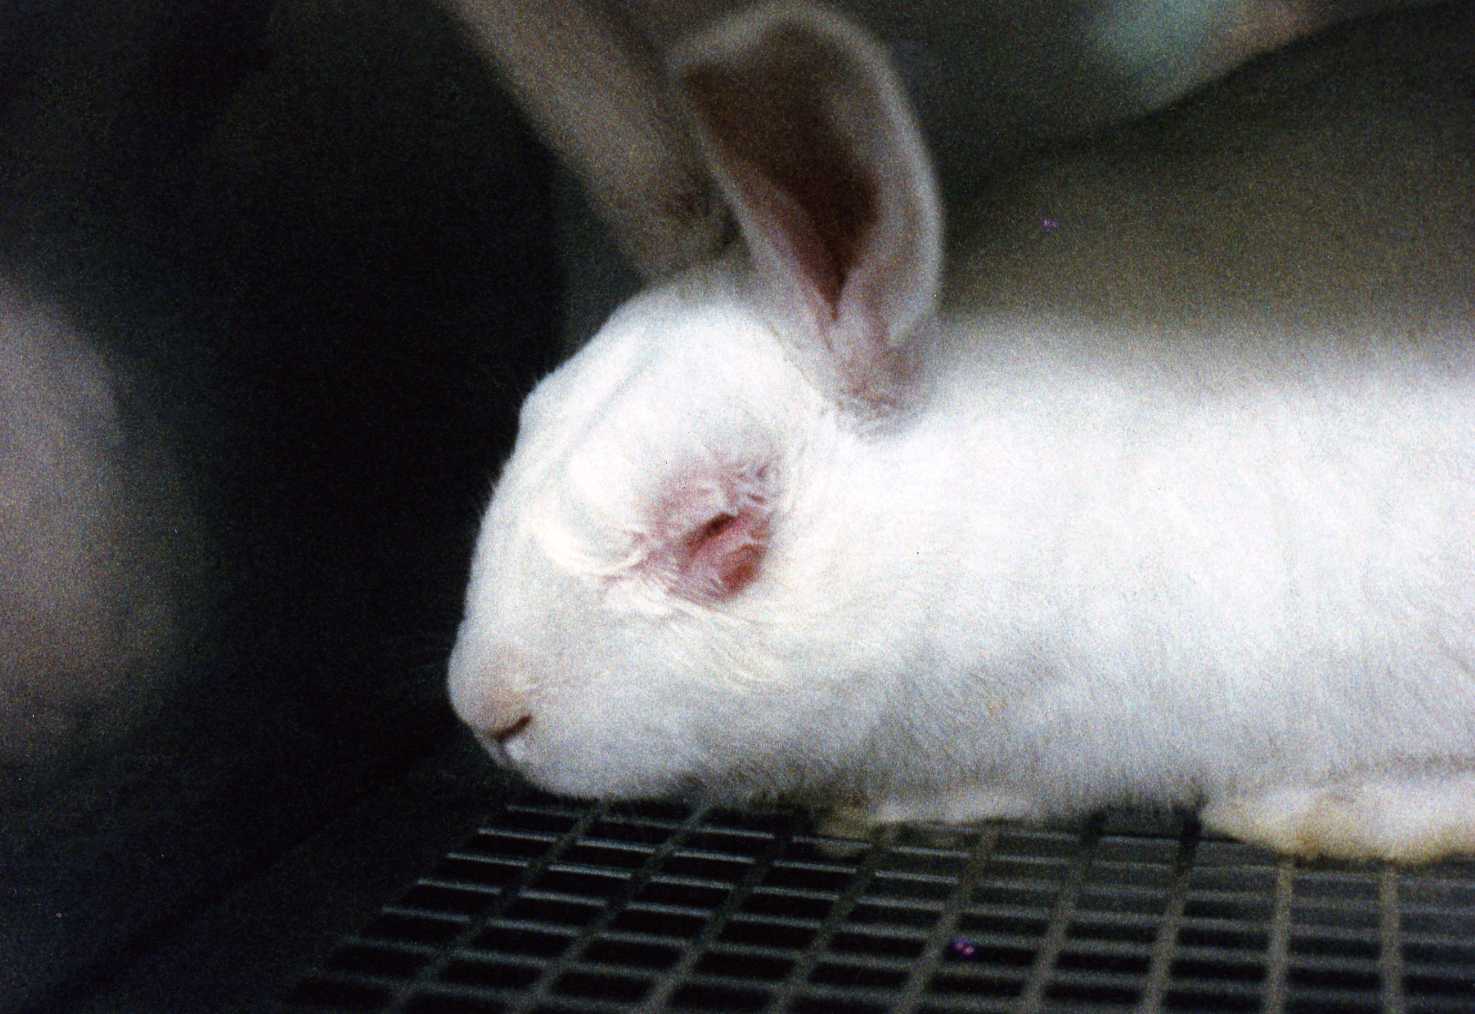 animal testing cosmetics